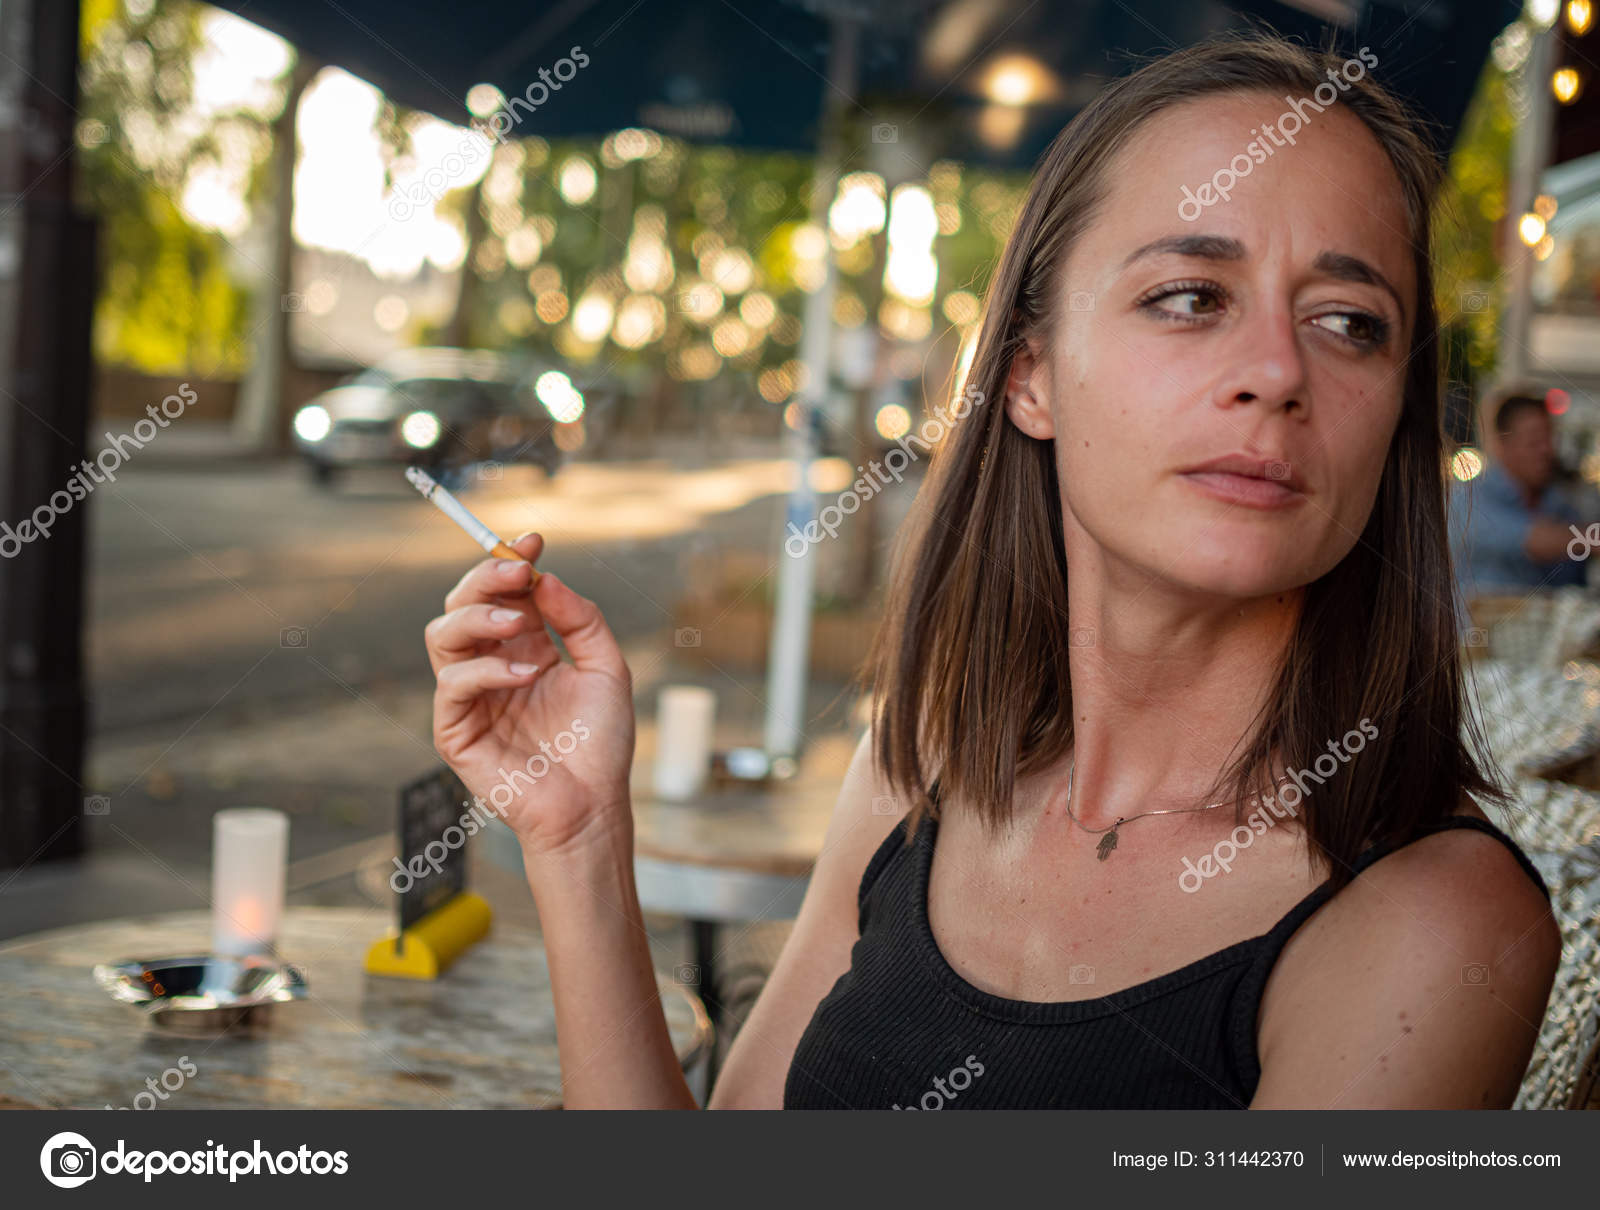 Smoking waitress